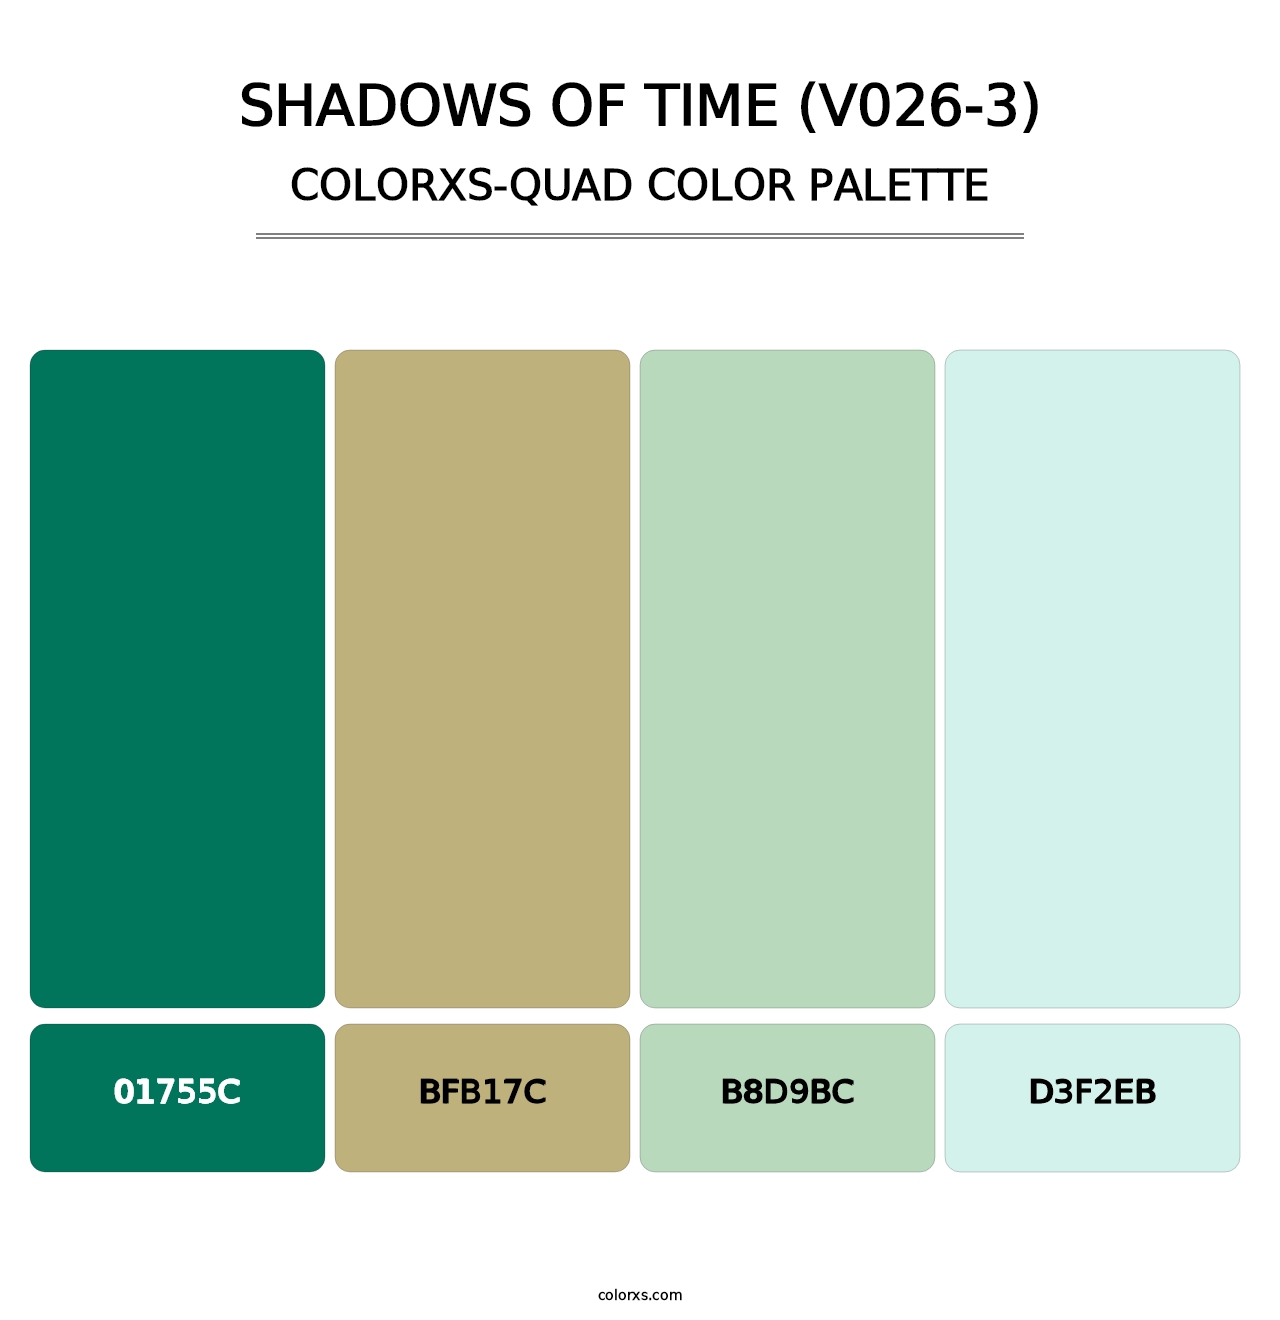 Shadows of Time (V026-3) - Colorxs Quad Palette